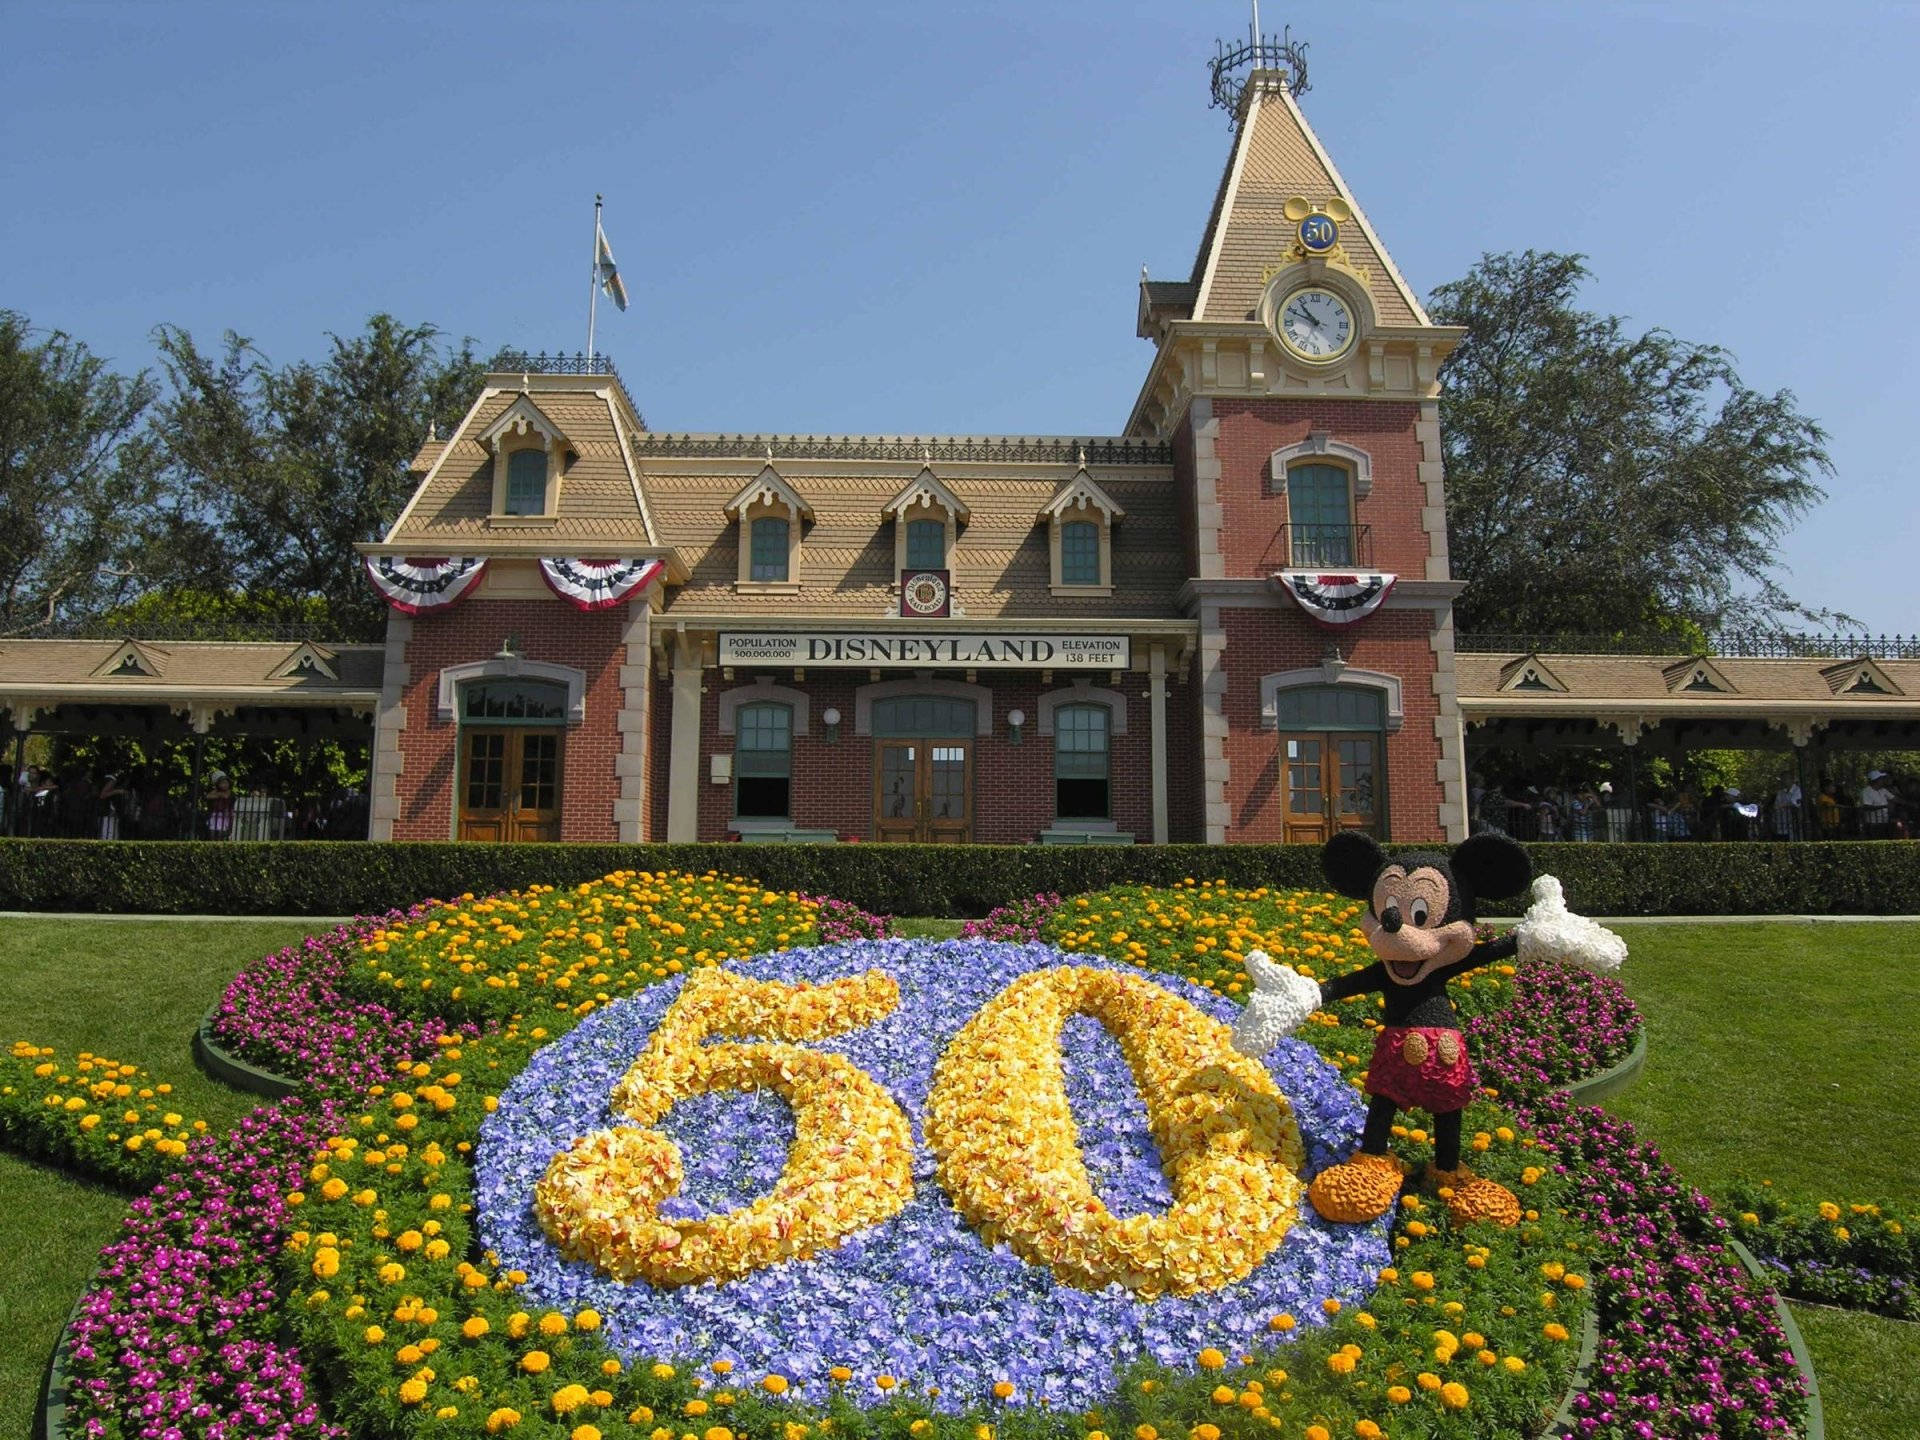 Castillode Disneyland En Jardín De Flores Fondo de pantalla